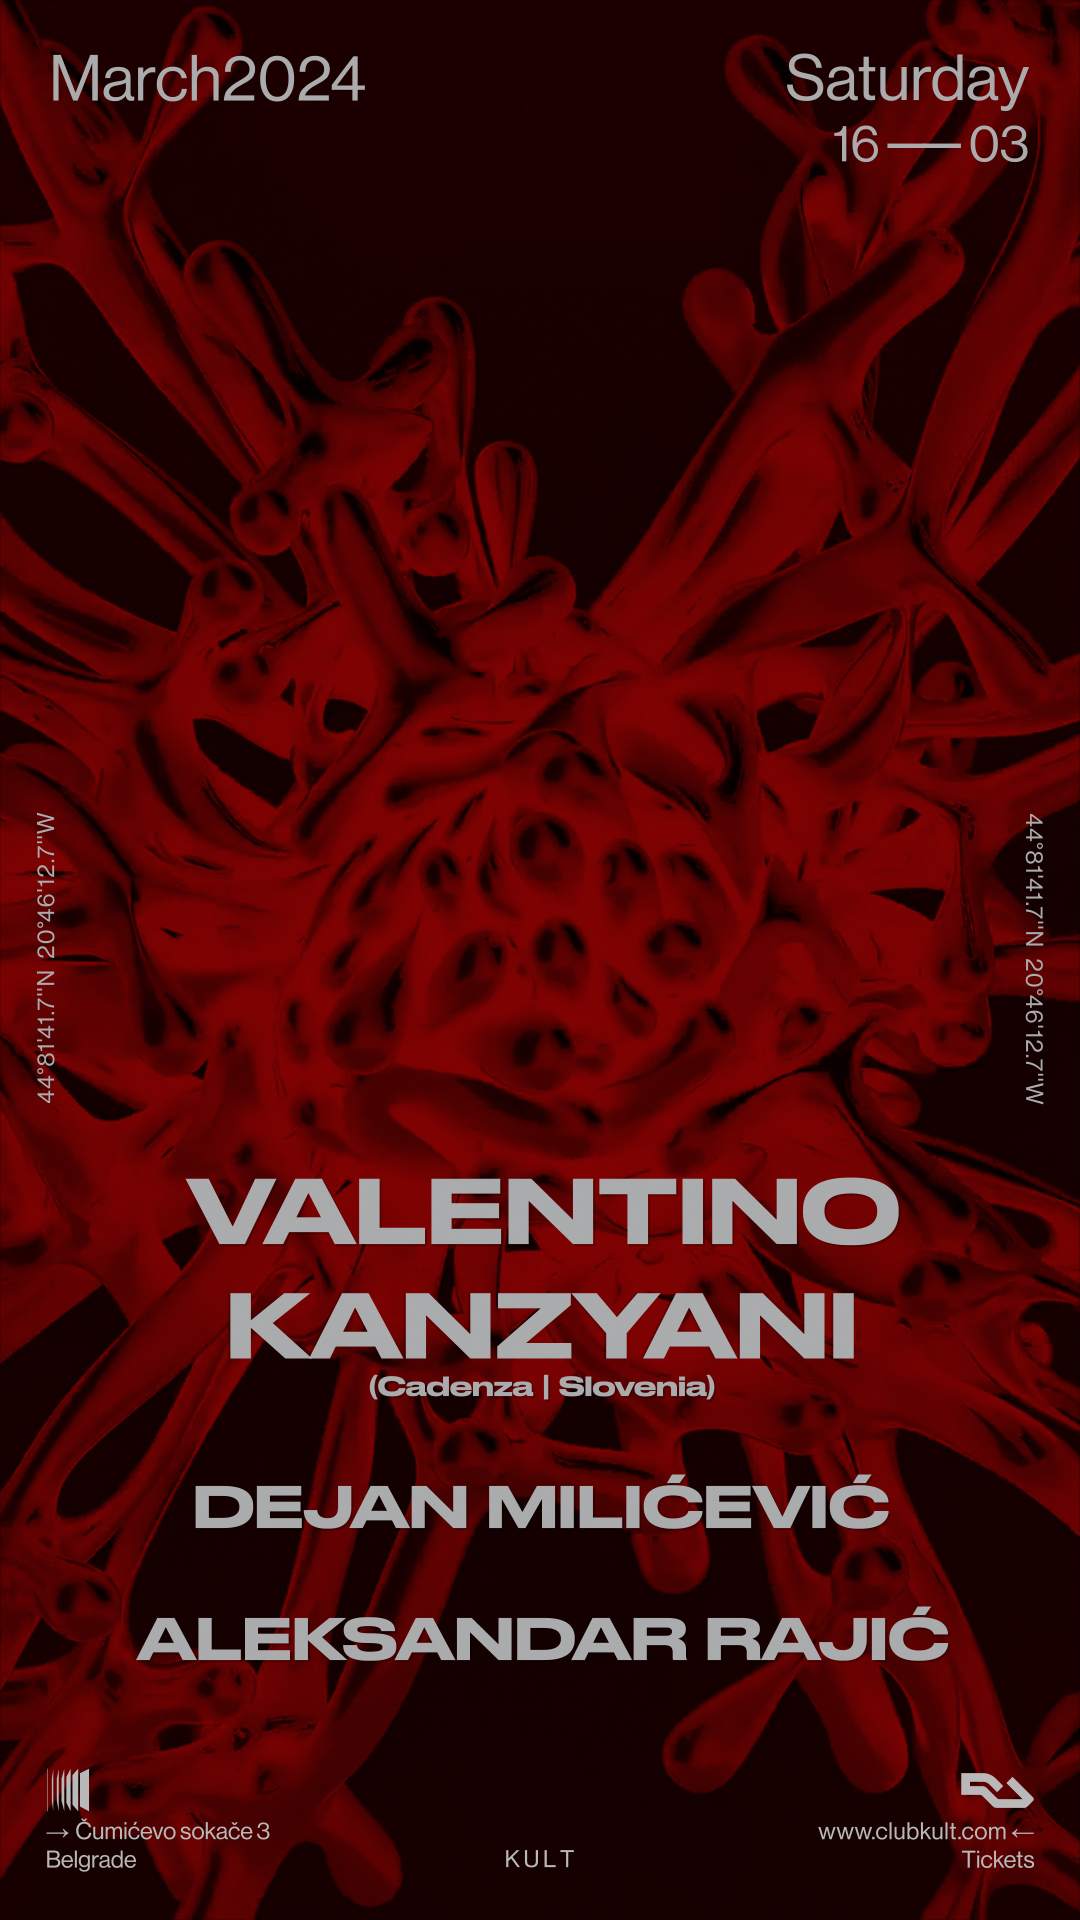 Valentino Kanzyani at KULT - 16.03 - フライヤー表